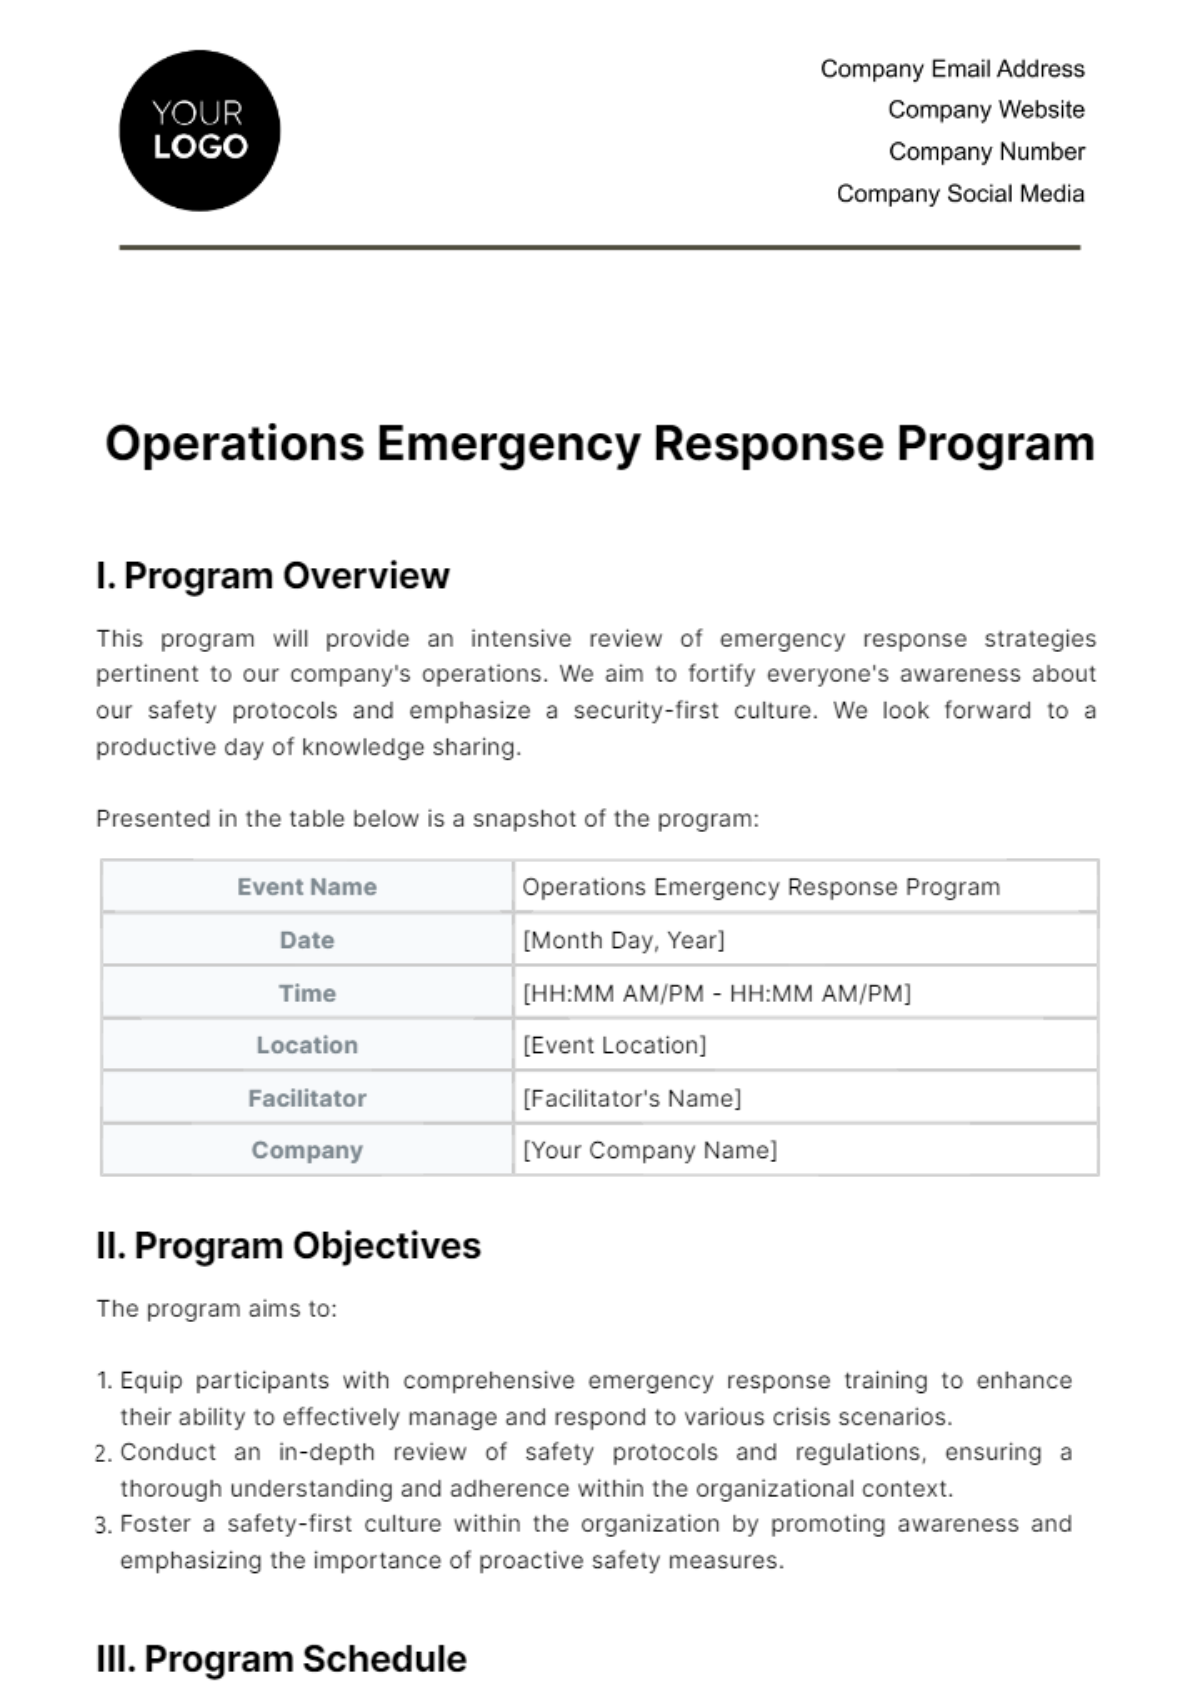 Operations Emergency Response Program Template